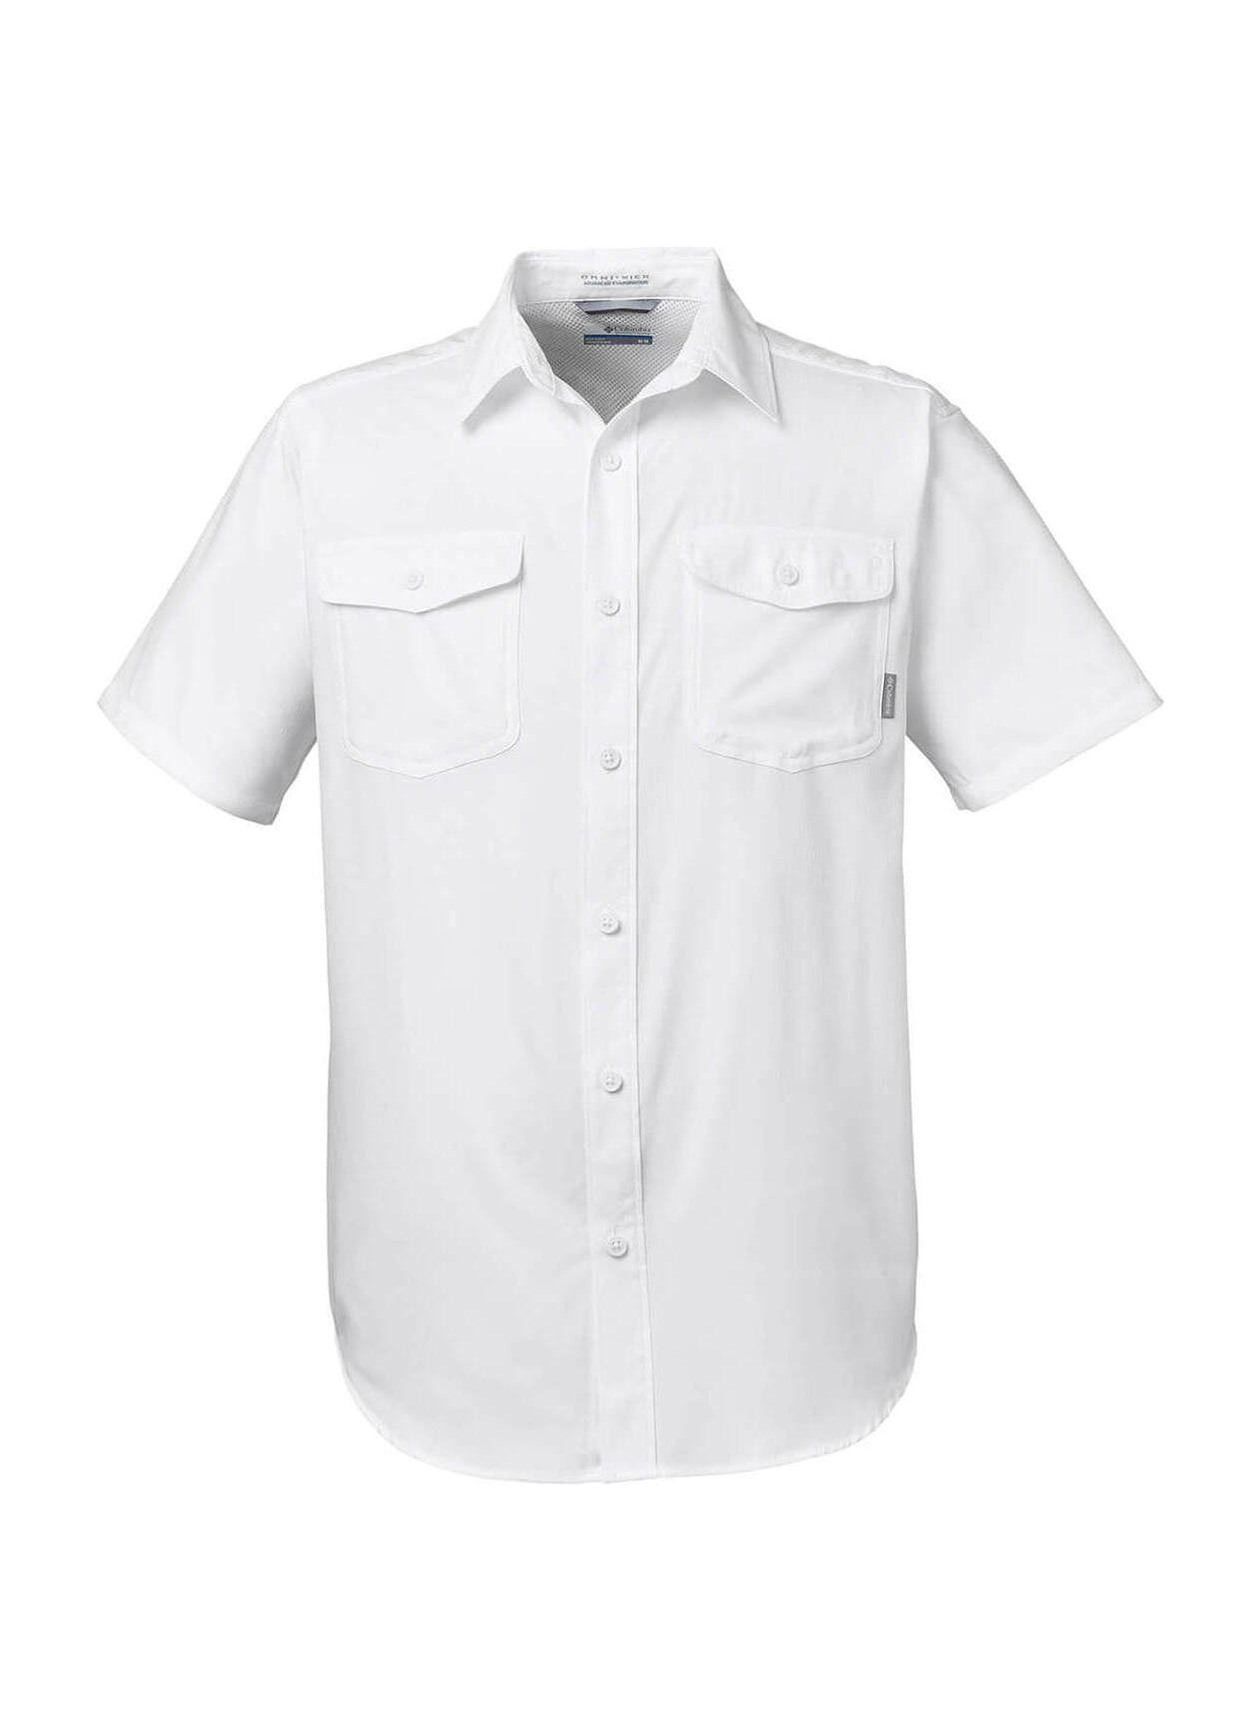 Columbia Men's White Utilizer II Solid Performance Short-Sleeve Shirt